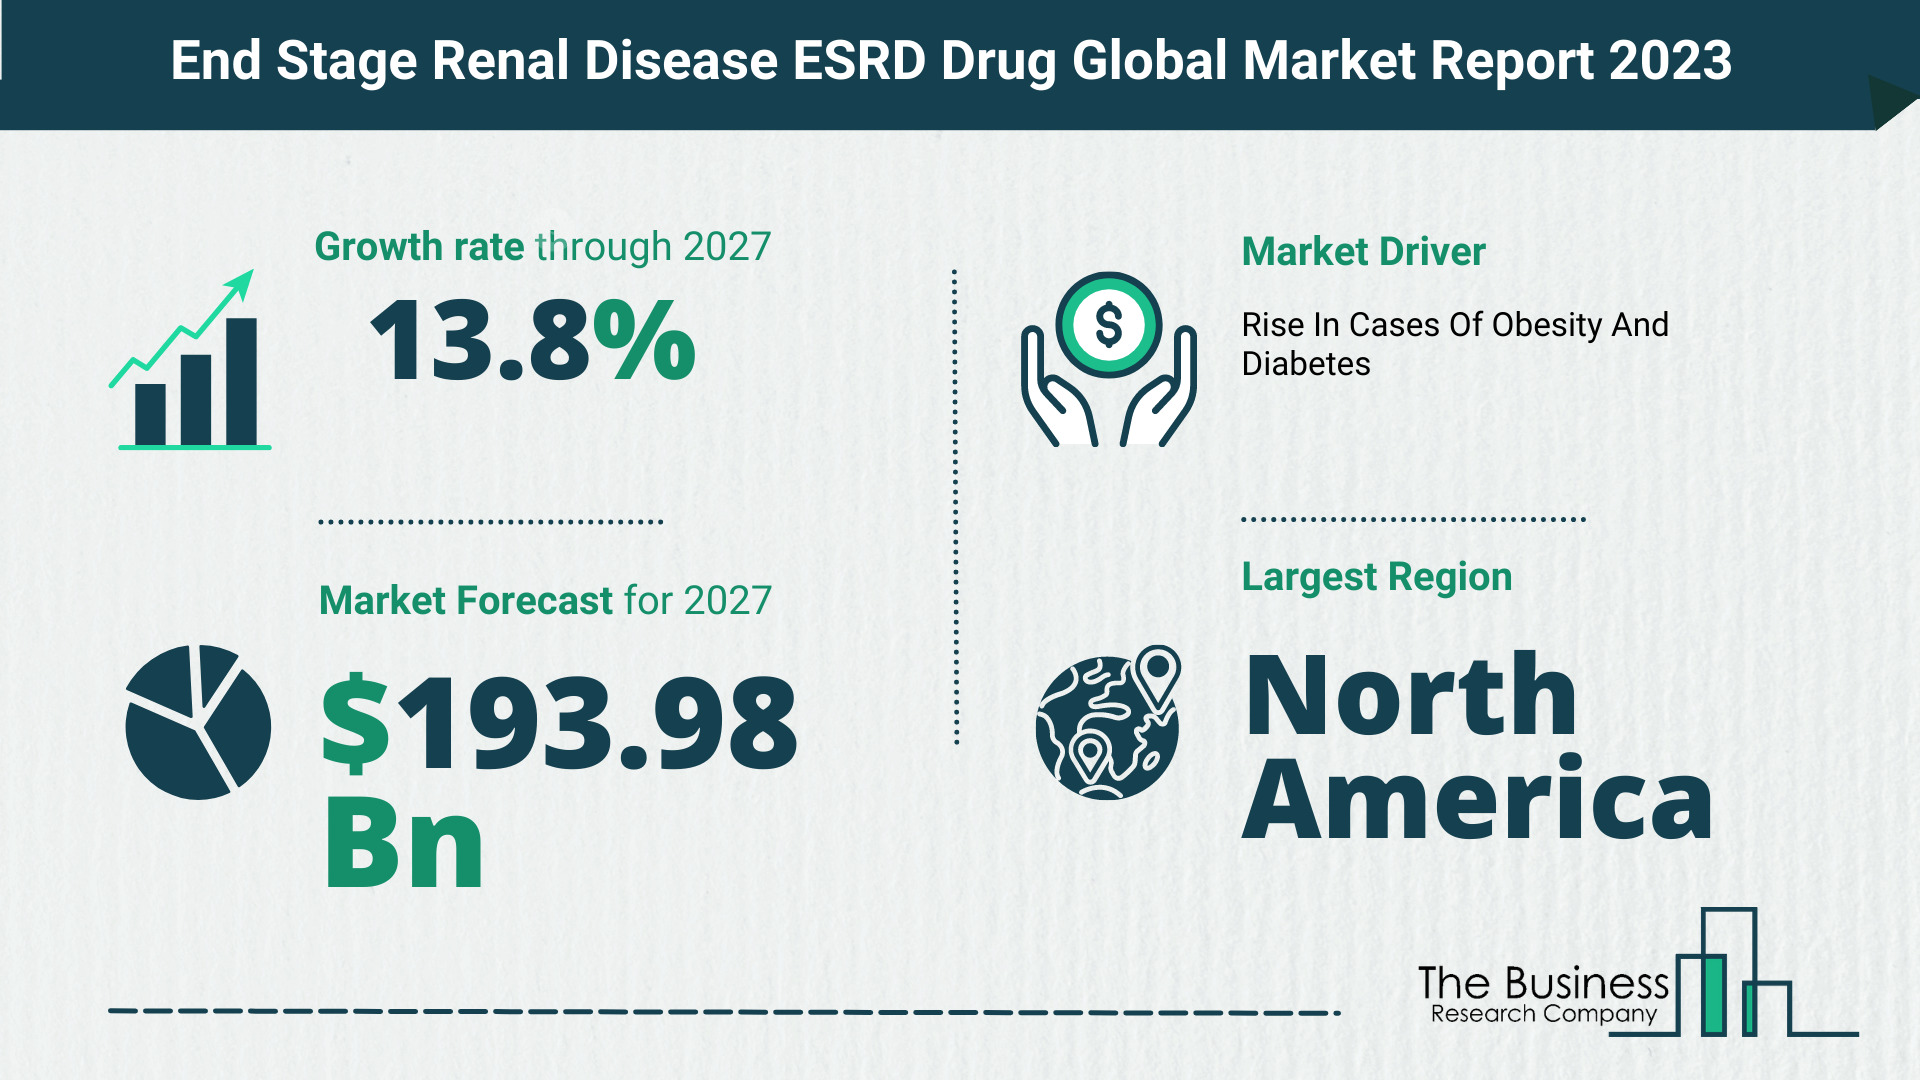 Global End Stage Renal Disease ESRD Drug Market